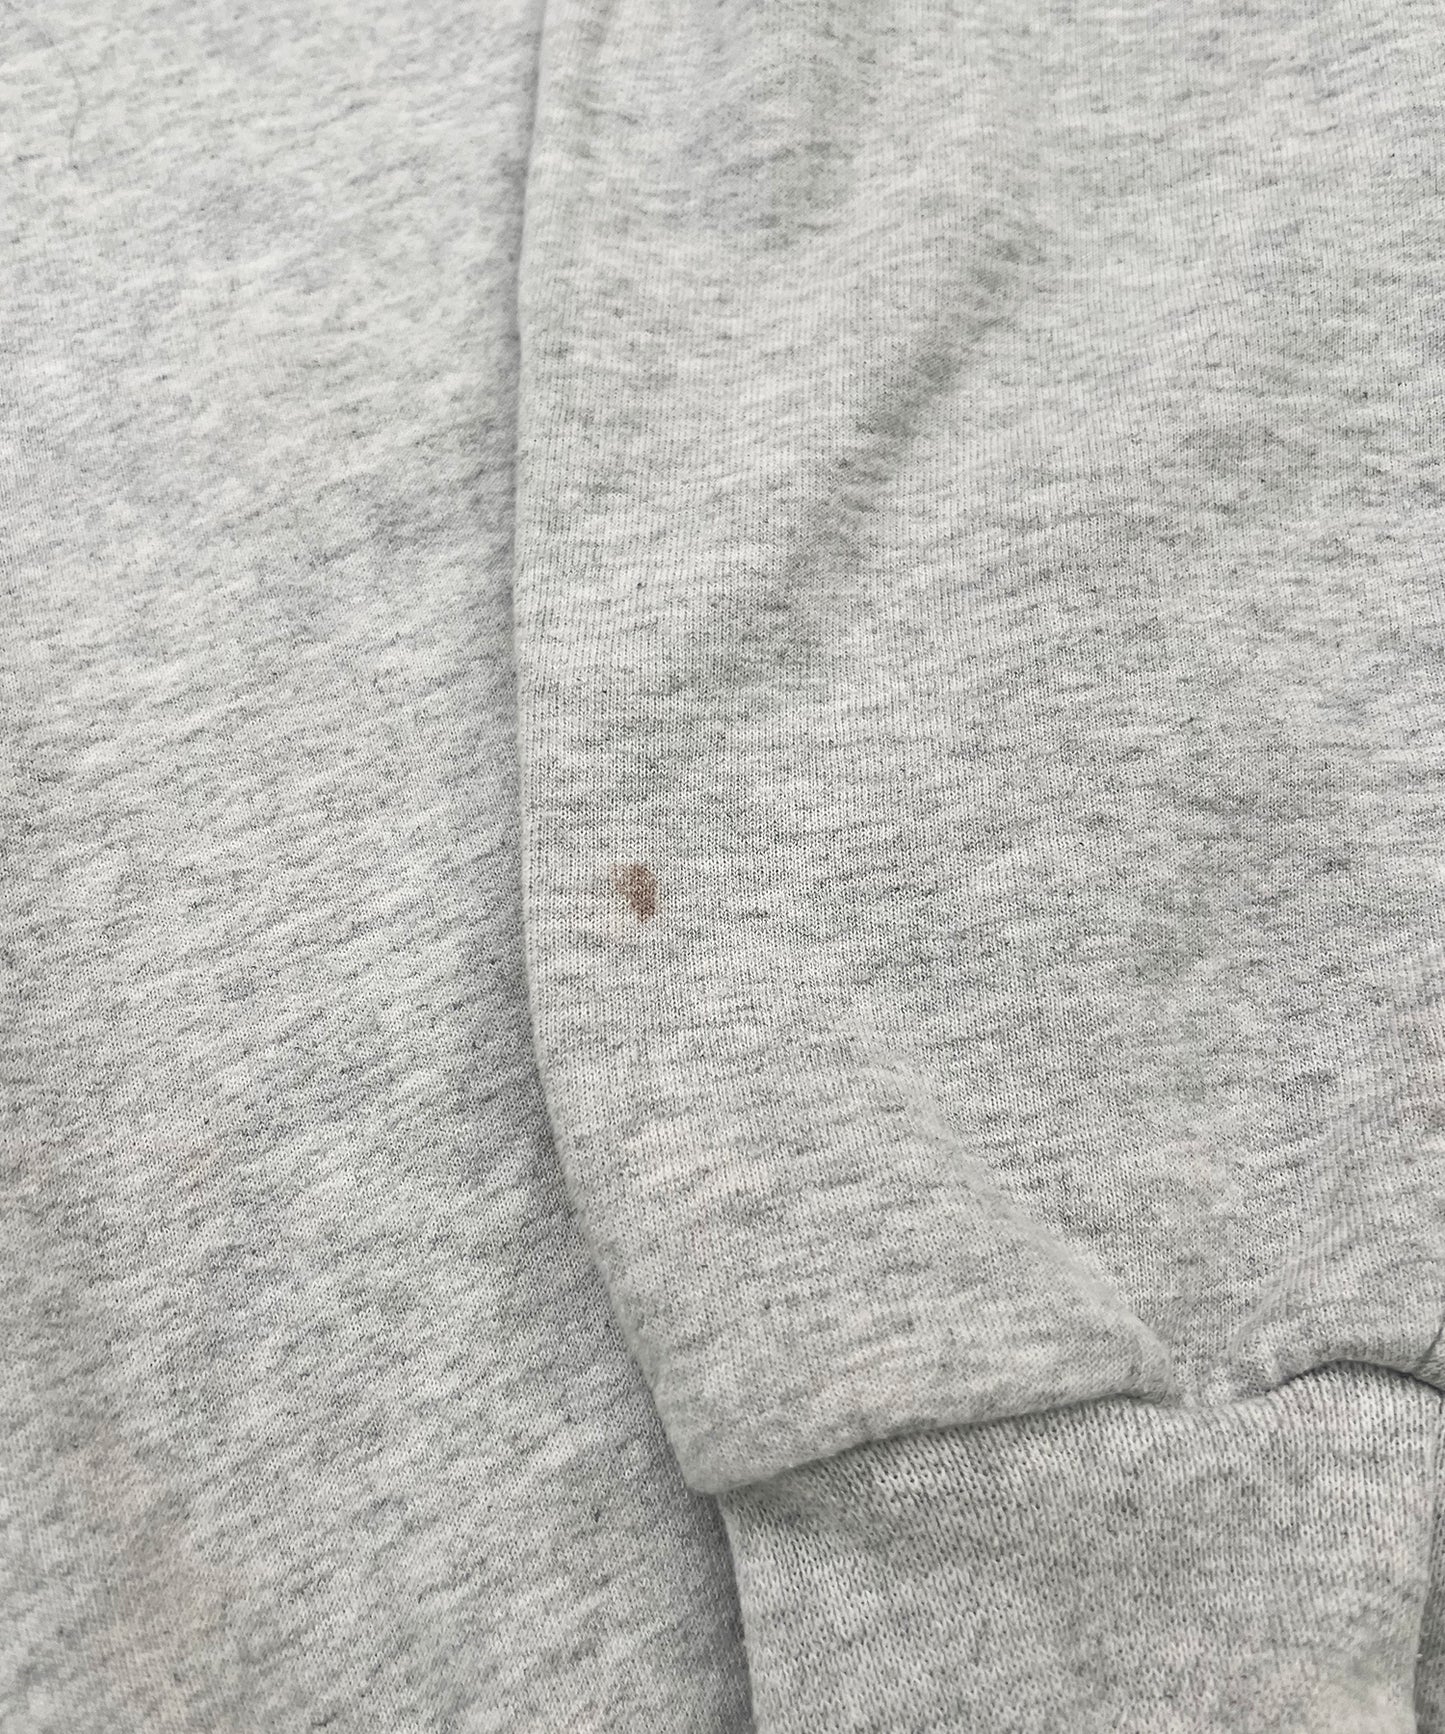 Lakai Quarter Zip Sweater (Medium)